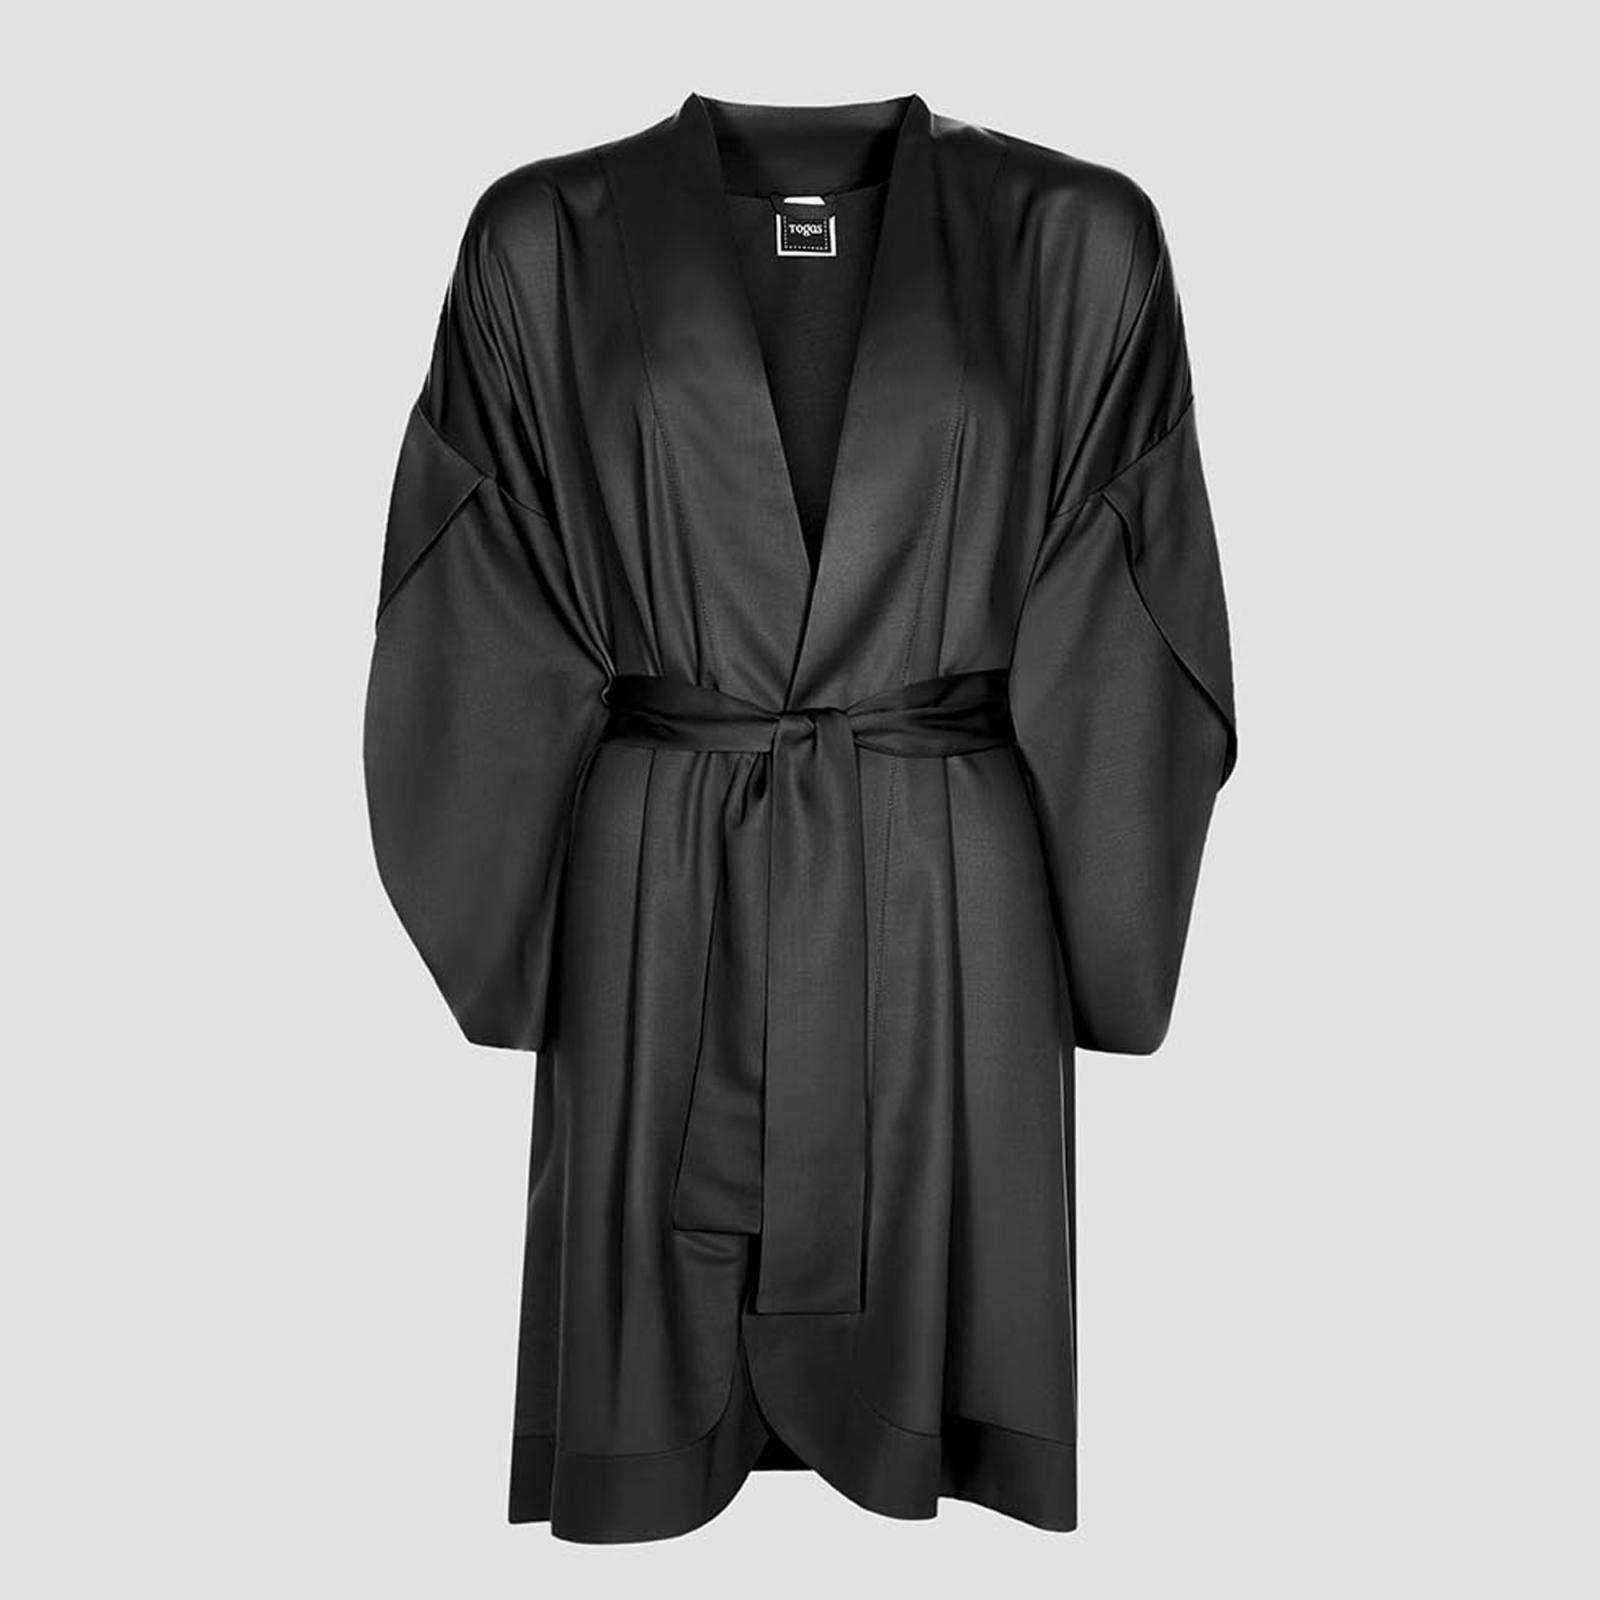 Халат-кимоно короткое Togas Наоми чёрное XXL (52) халат кимоно короткое togas наоми чёрное м 46